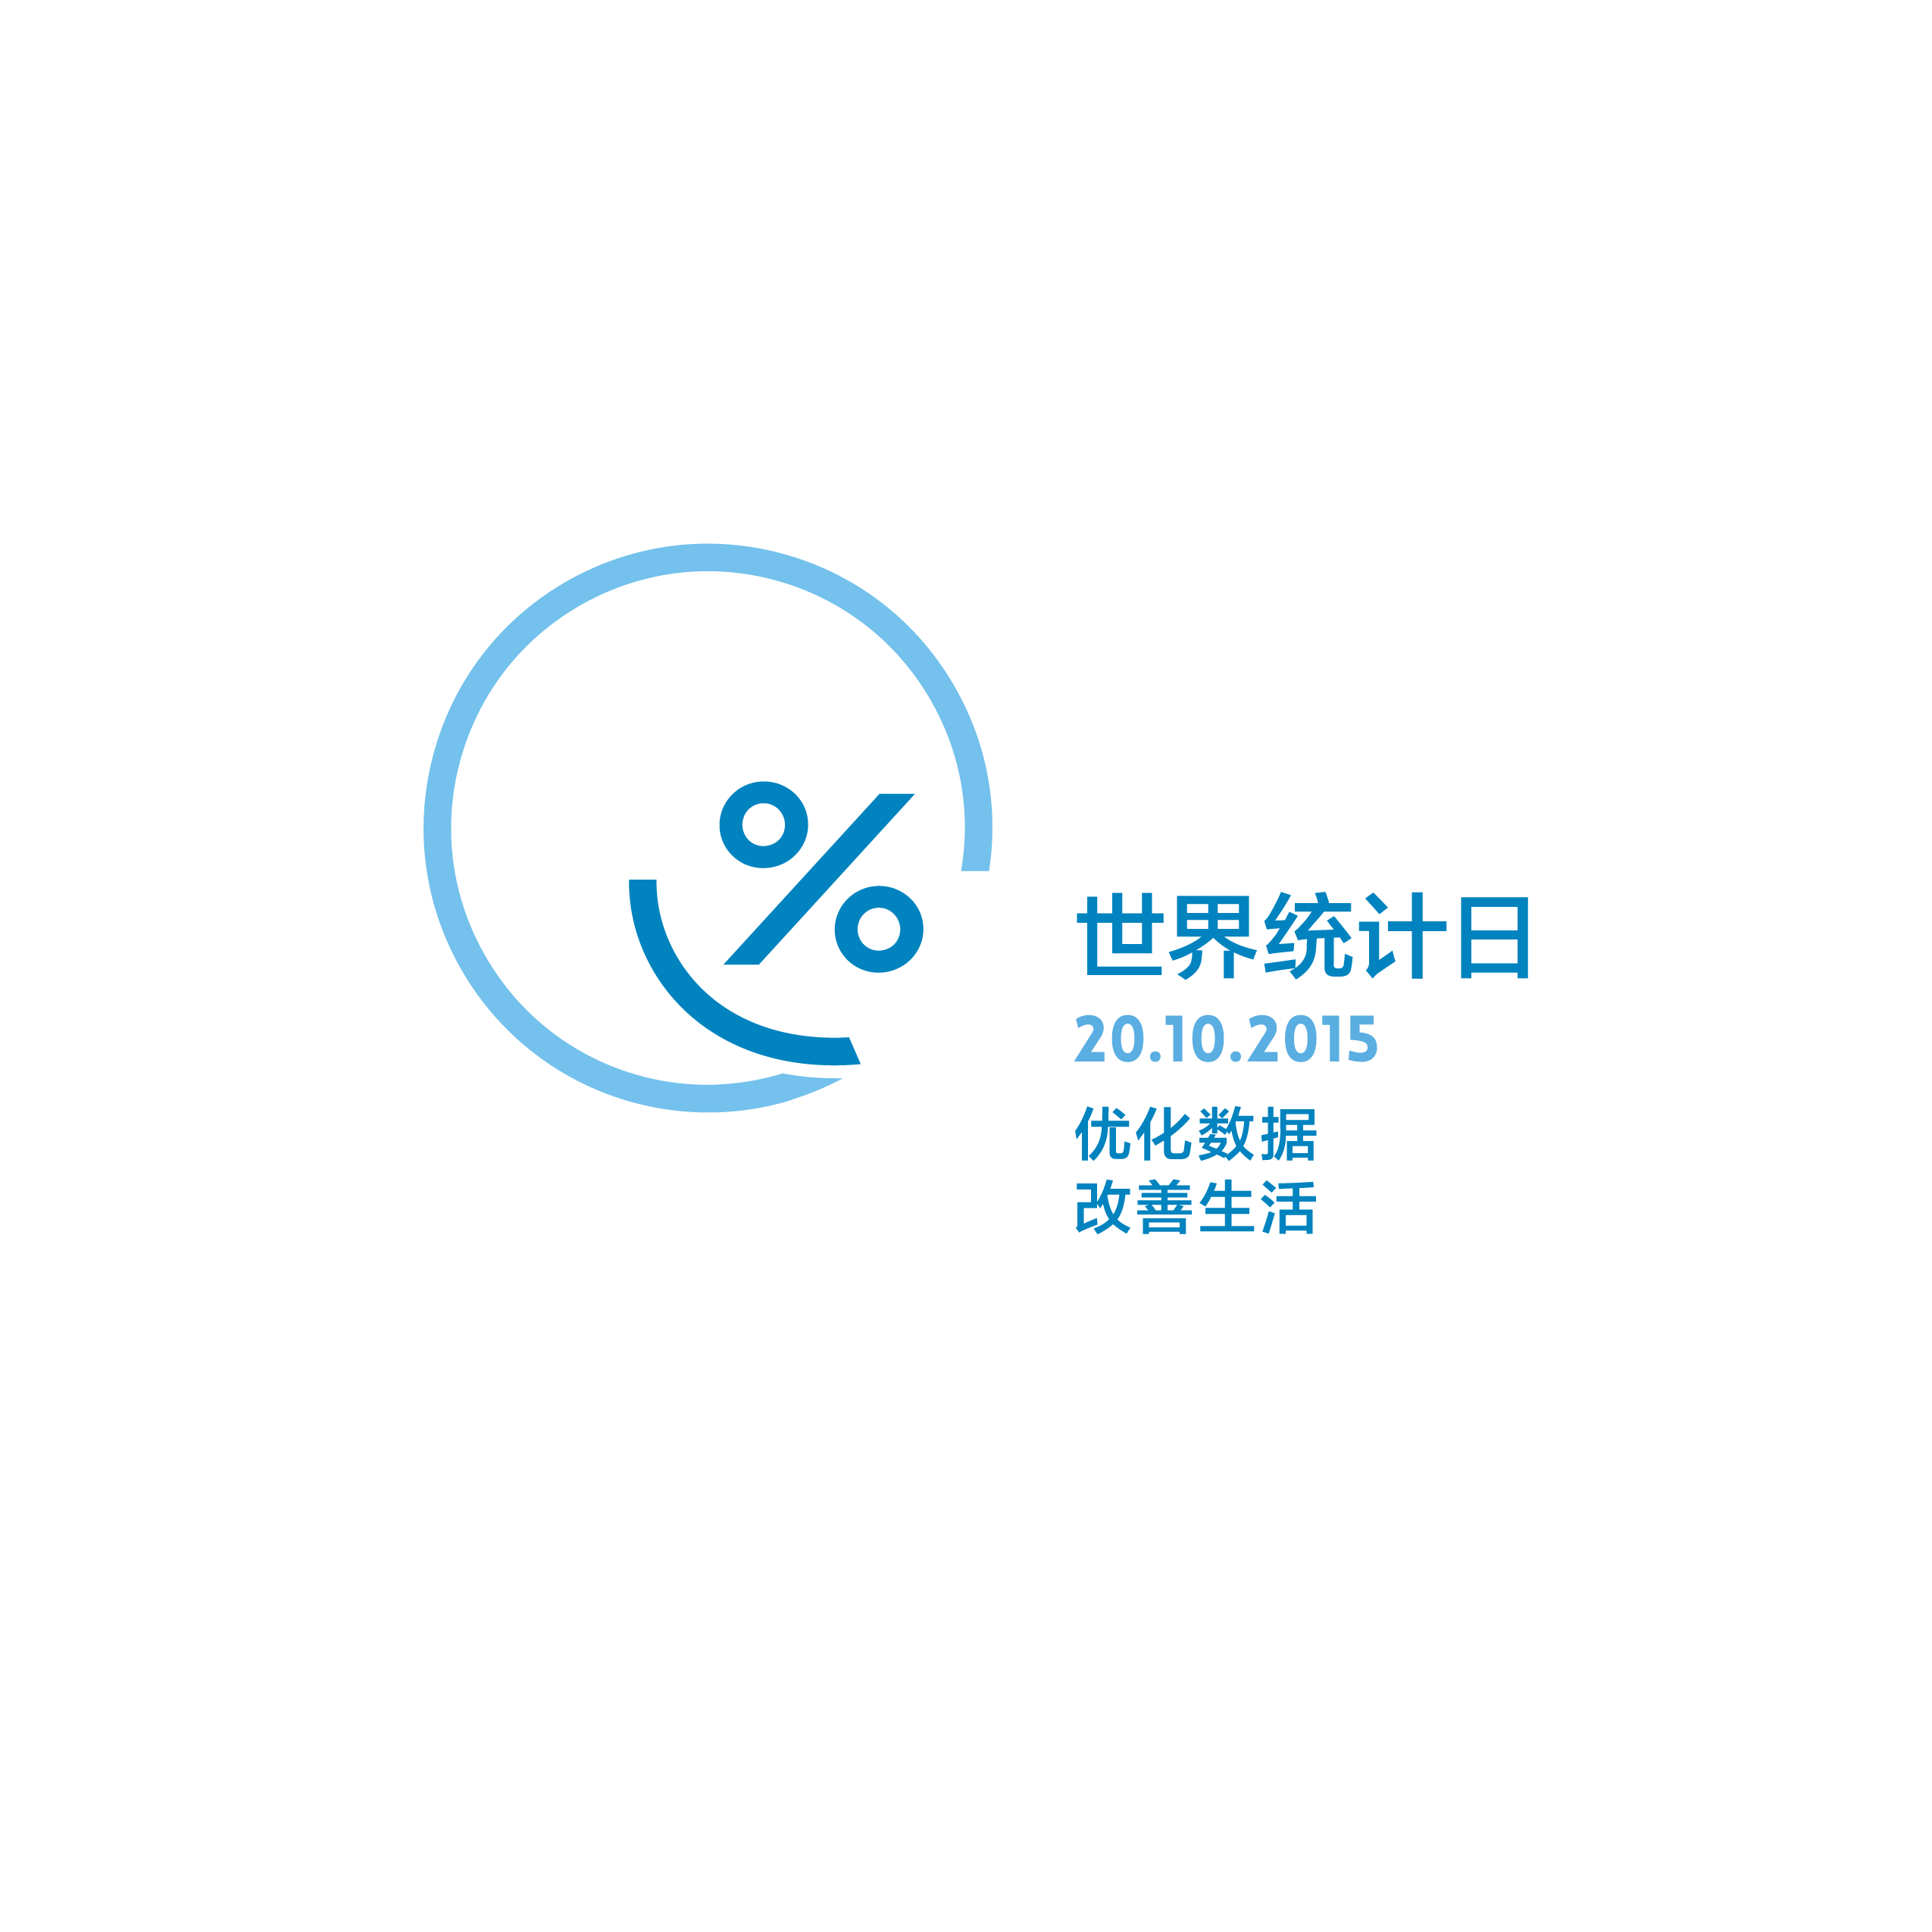 World Statistics Day Logo in Chinese